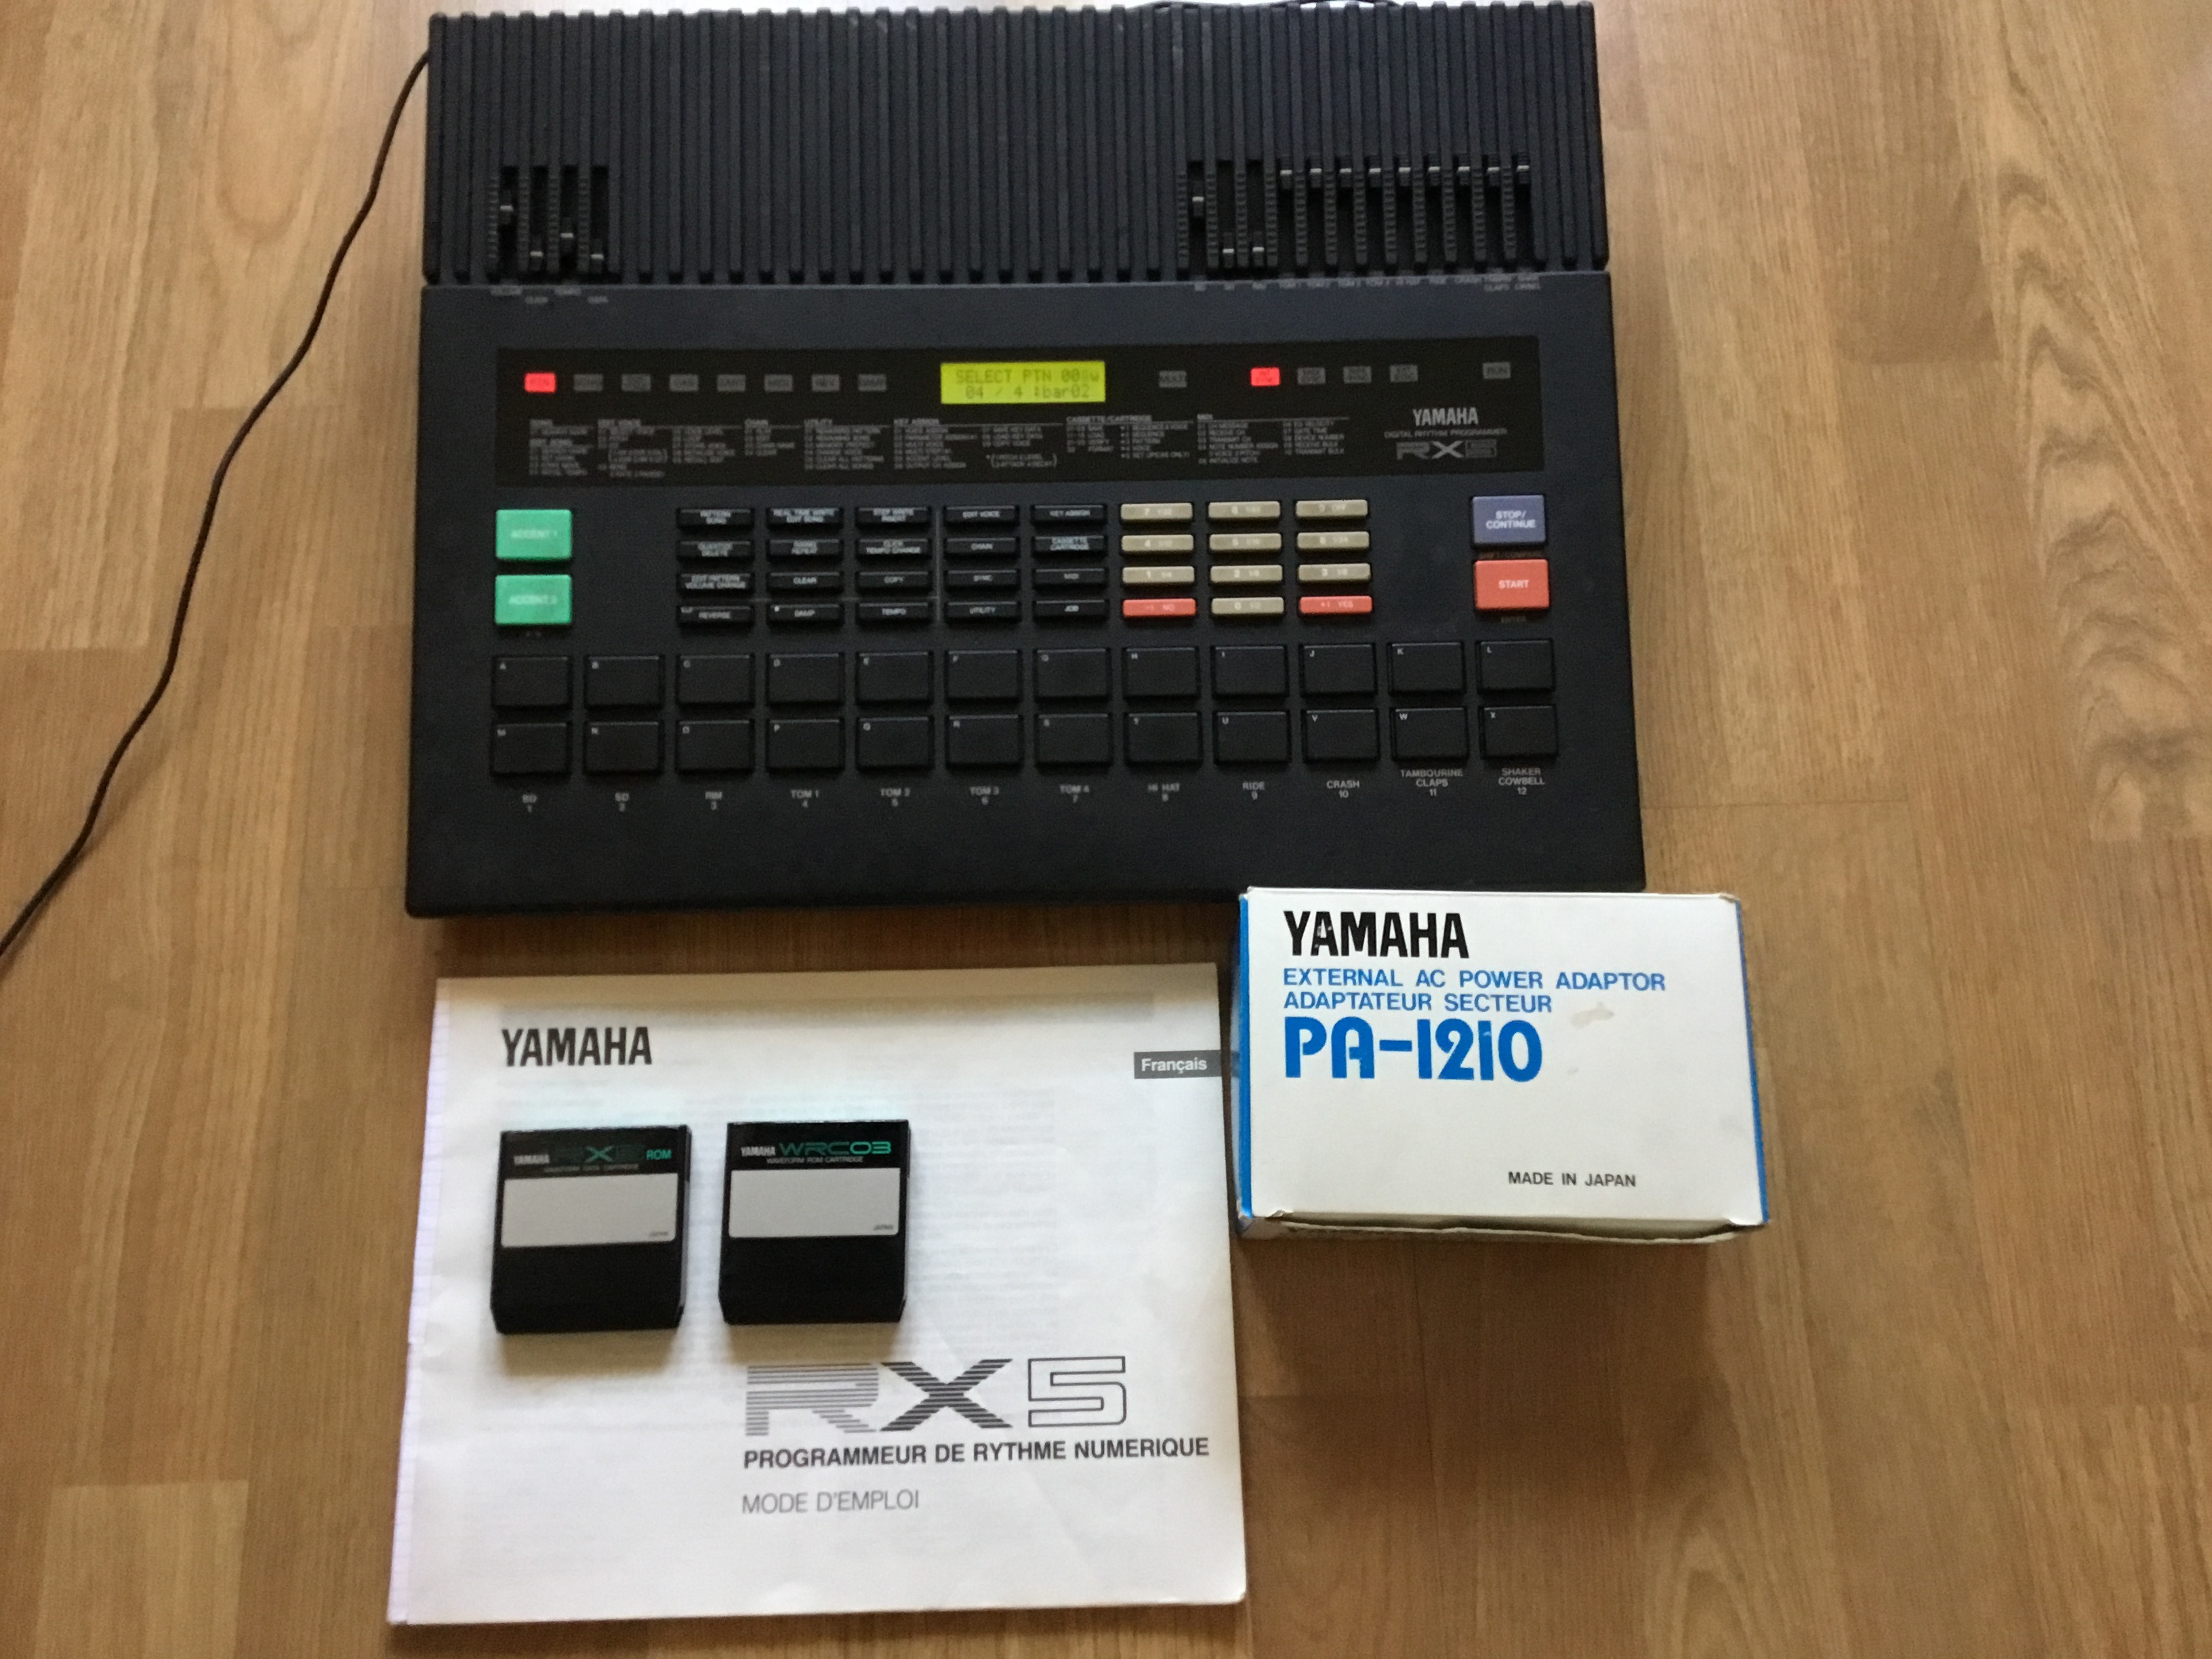 RX5 - Yamaha RX5 - Audiofanzine